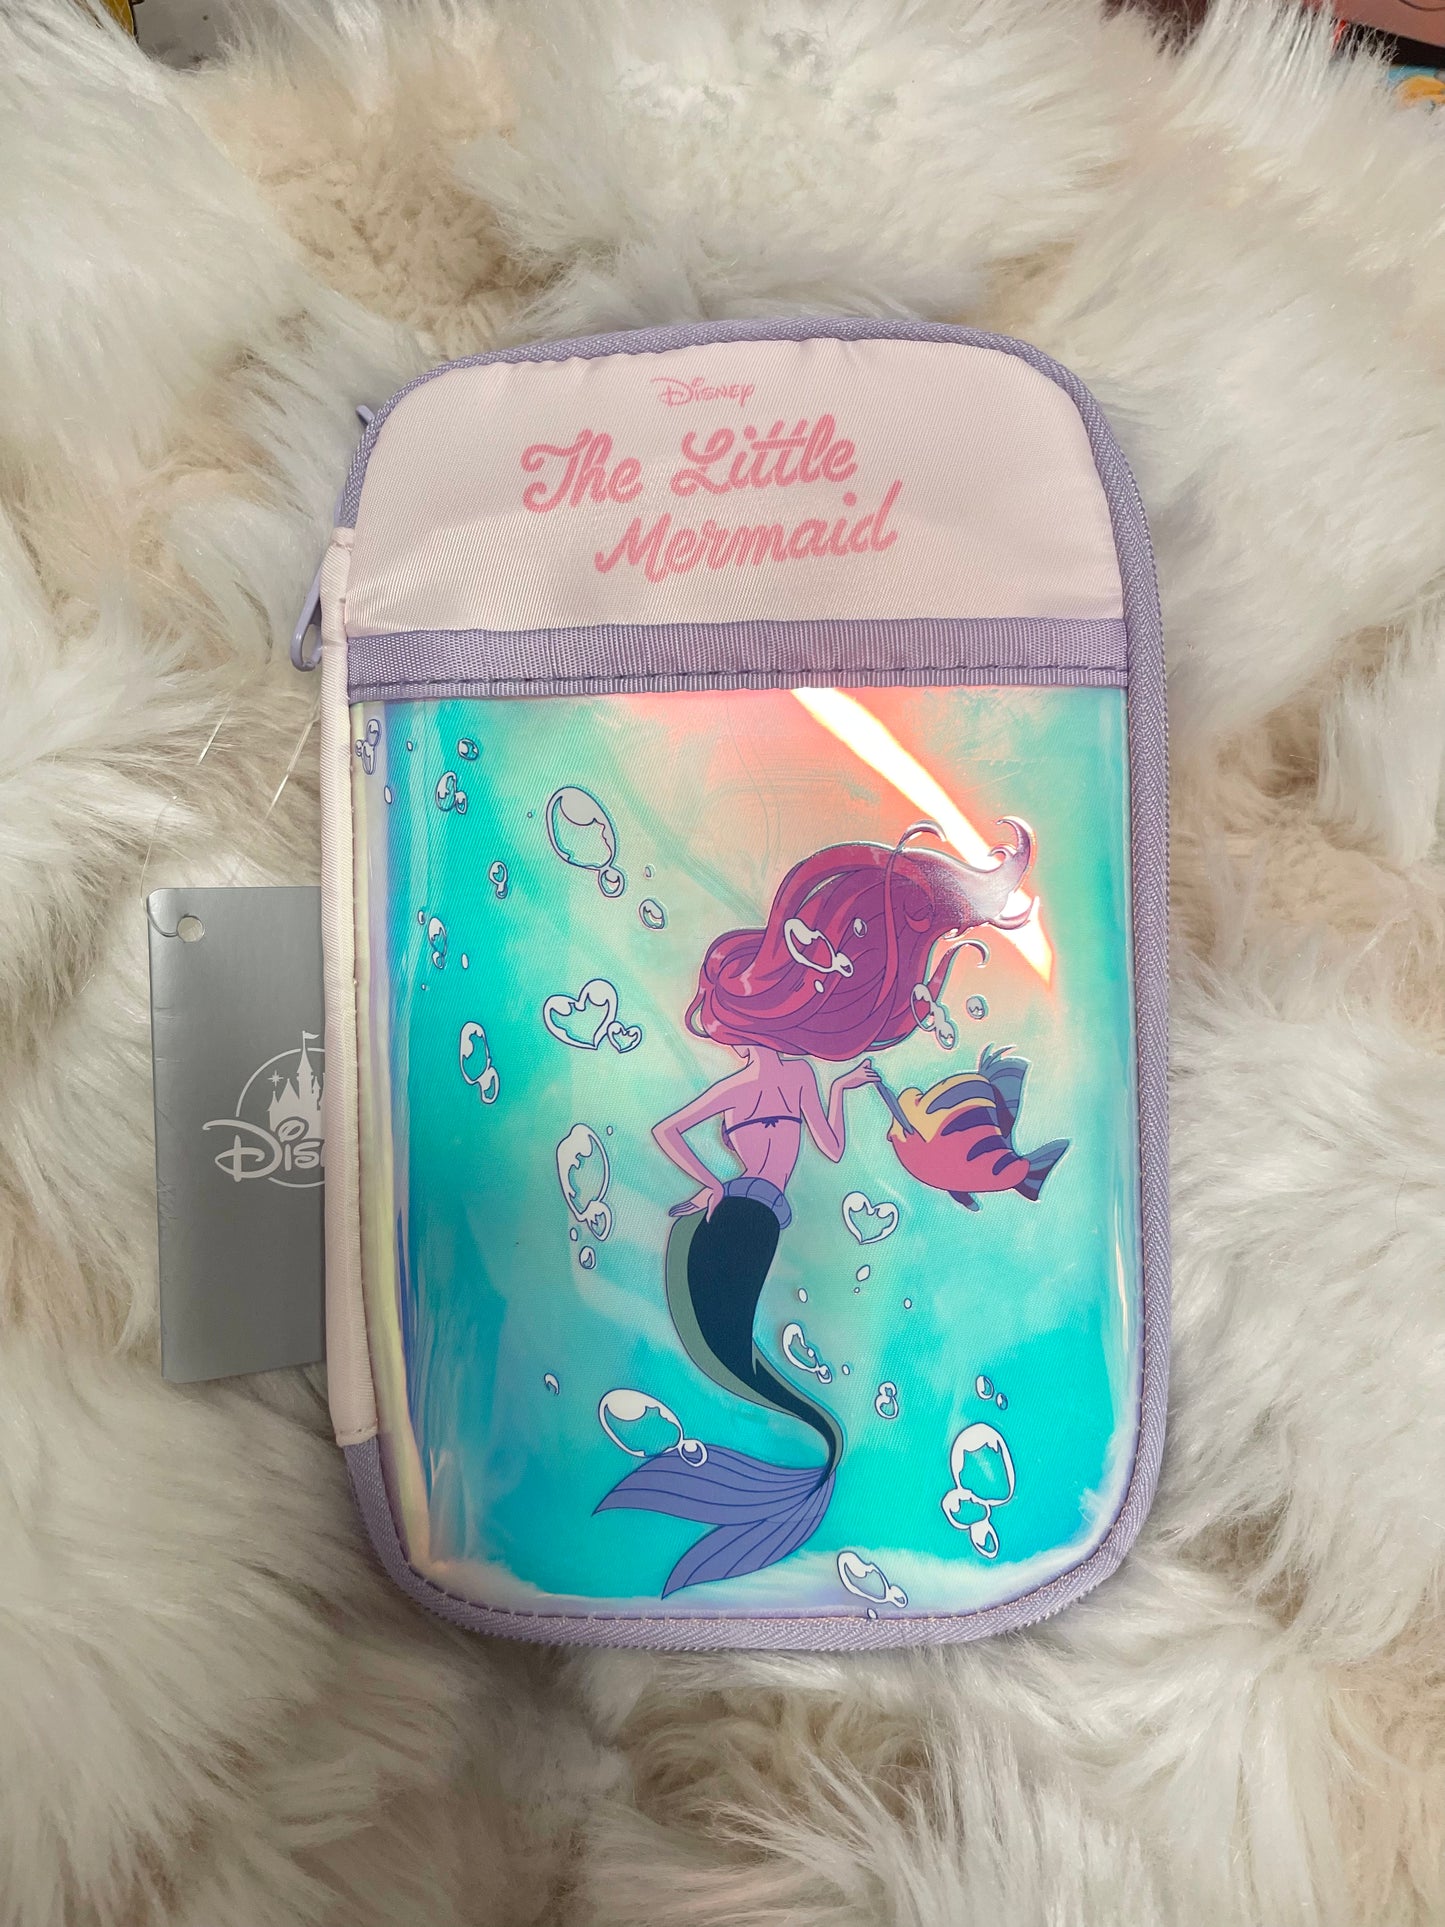 Disney store Japan the little mermaid anime style soft case